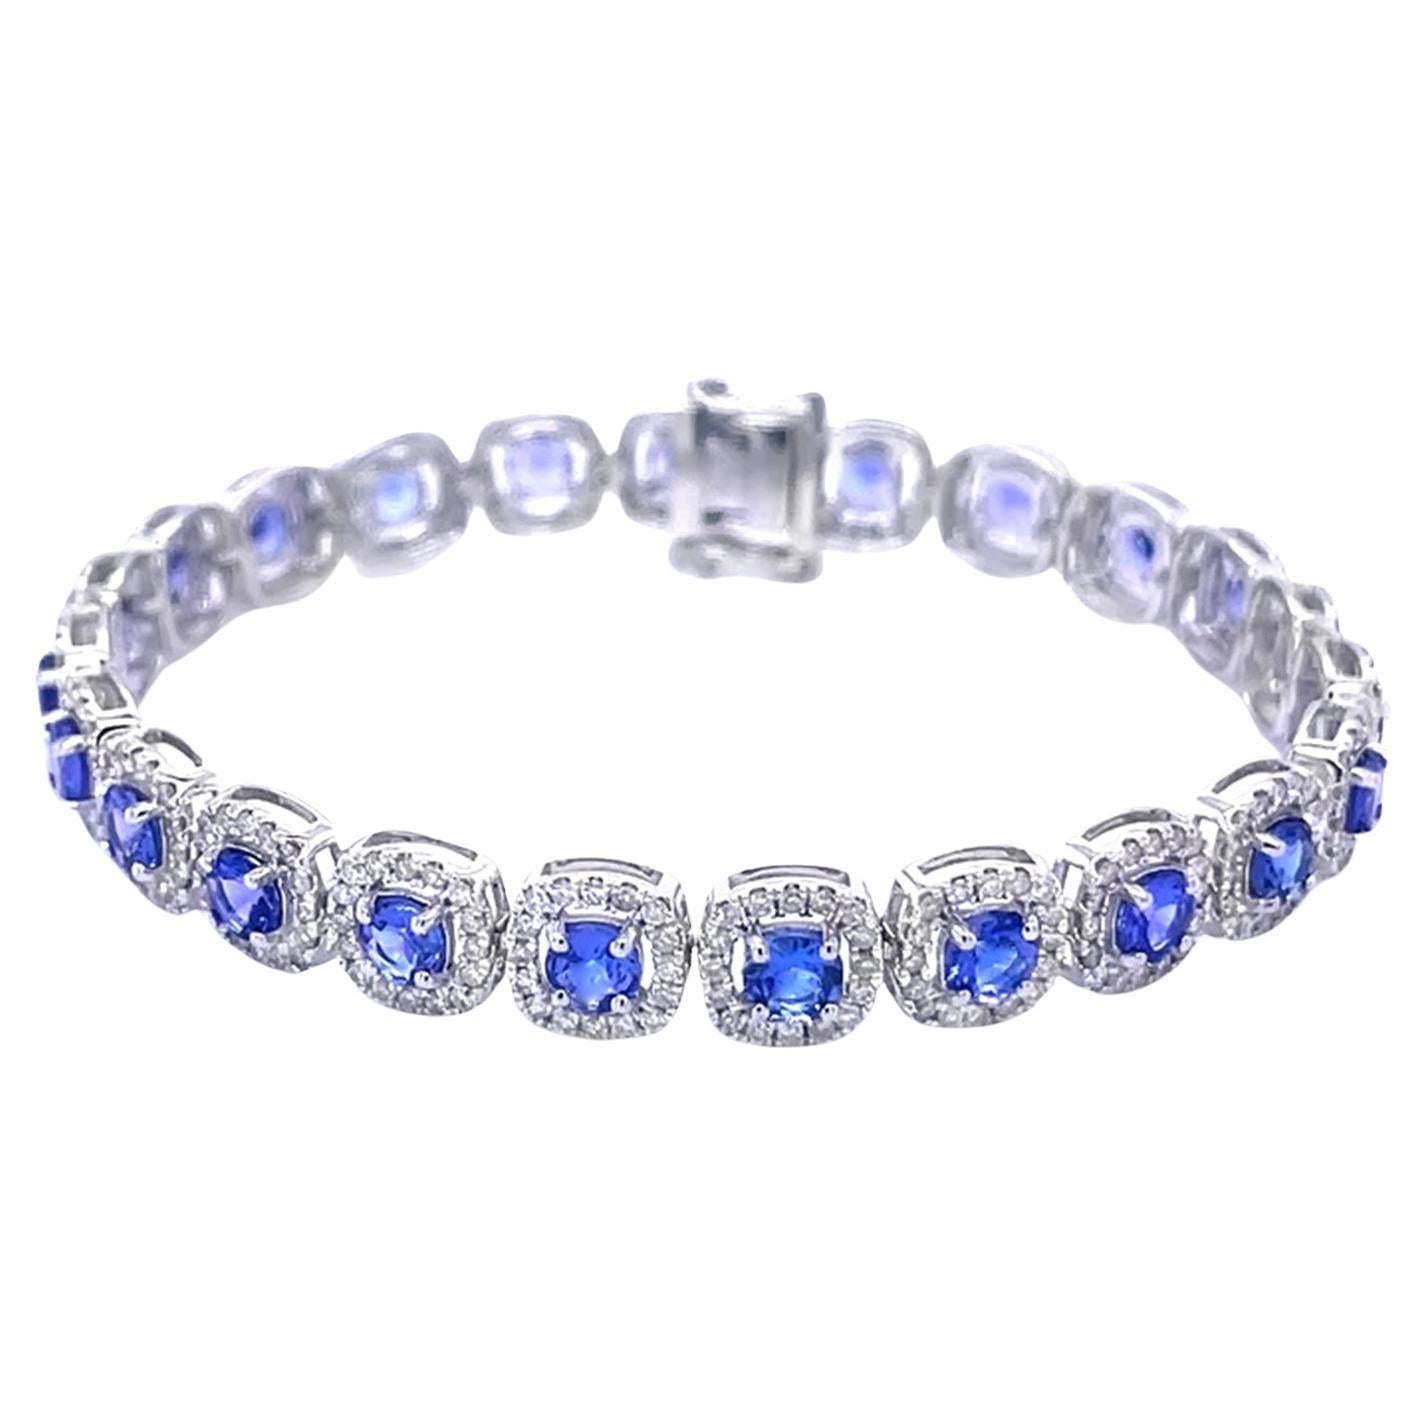 Tanzanite Bracelet With Diamonds 8.40 Carats 14K White Gold